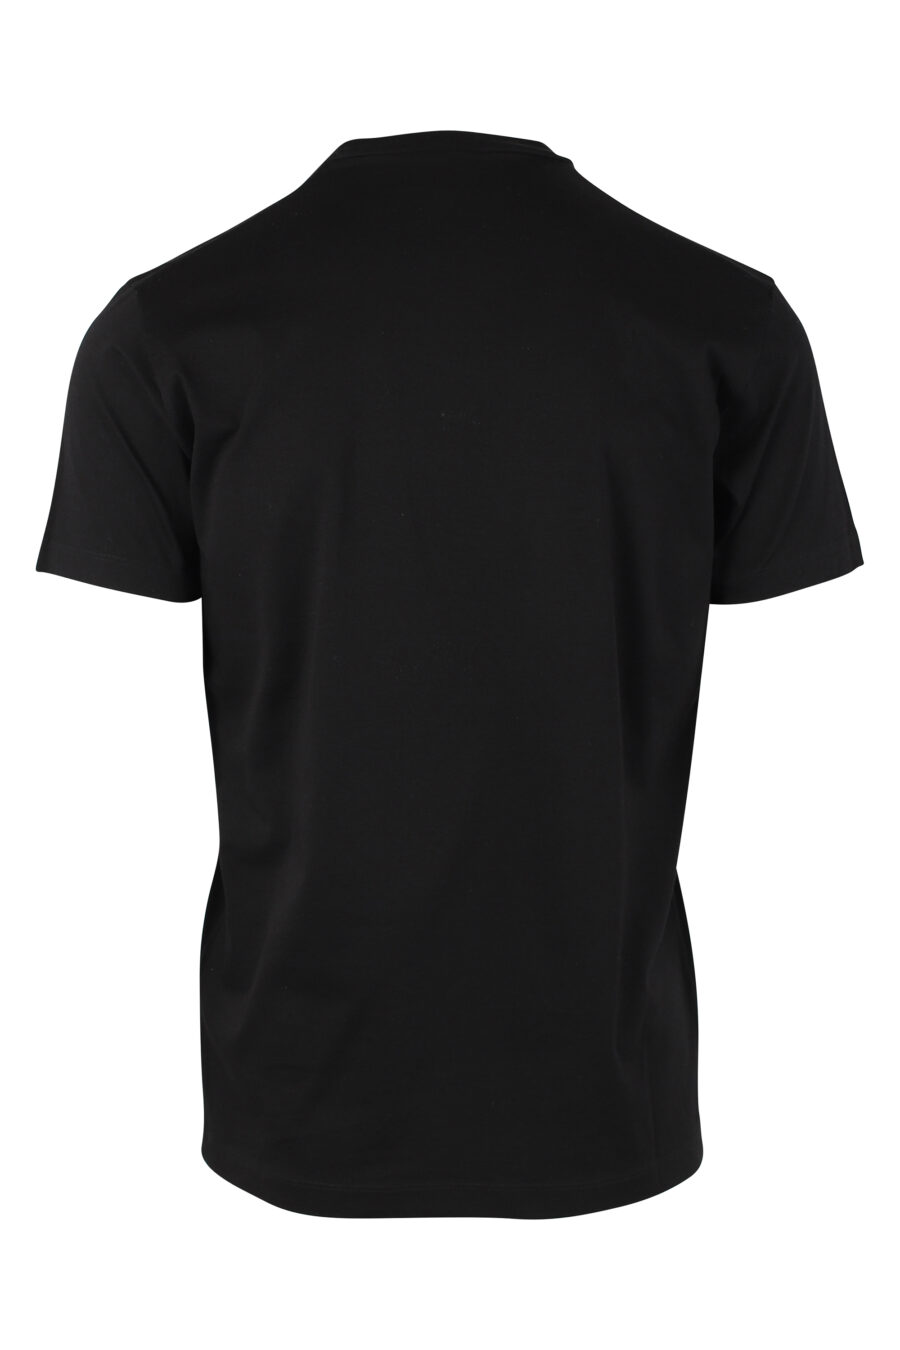 T-shirt schwarz mit Logo "Ikone Sonnenuntergang" - IMG 9756